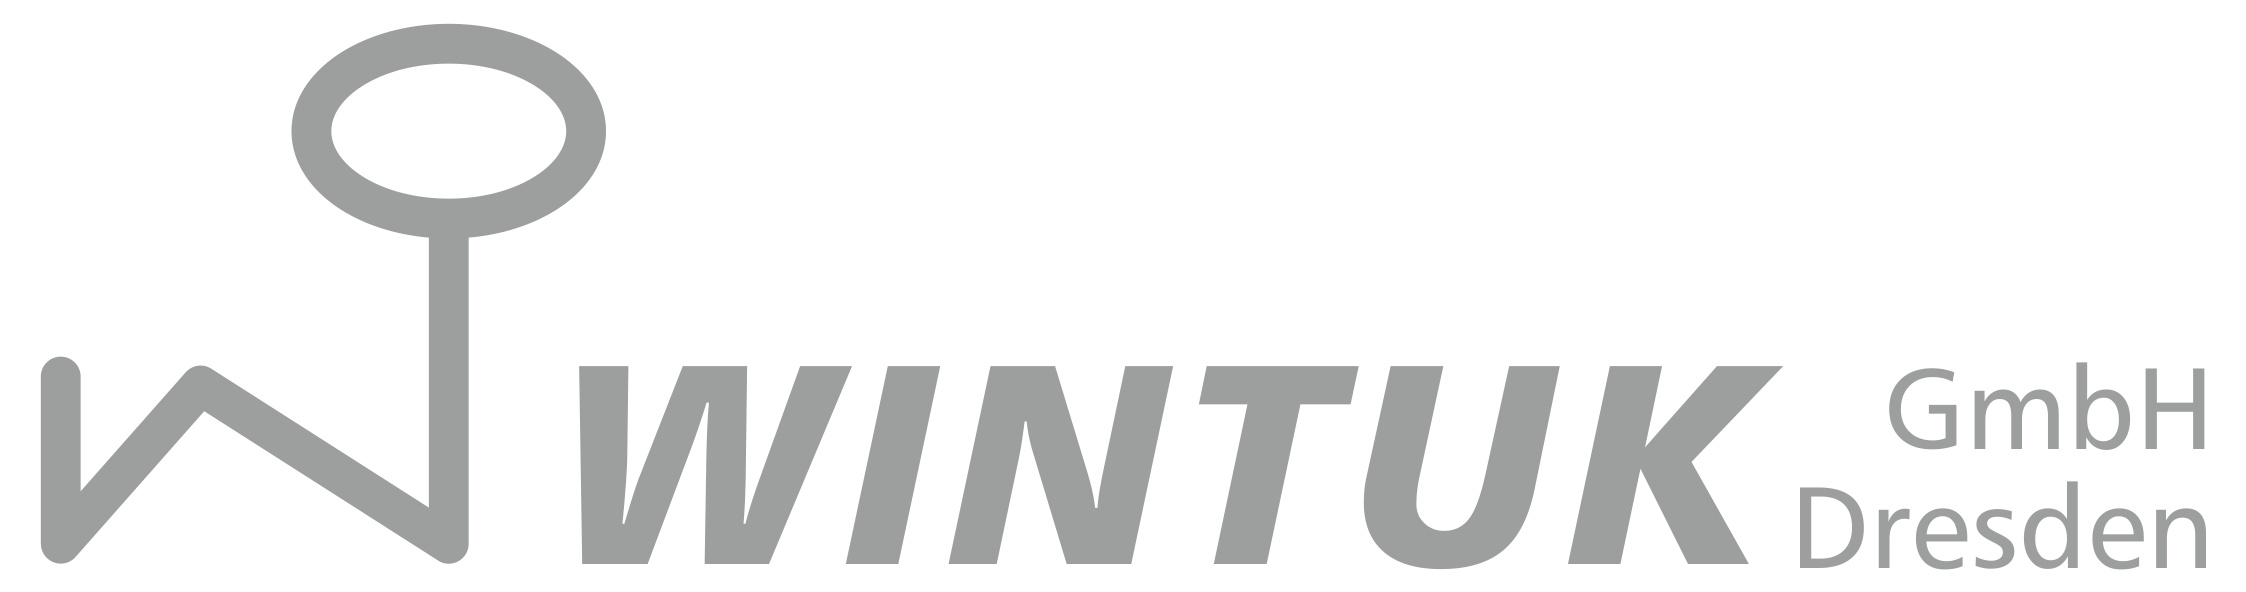 Wintuk GmbH Dresden